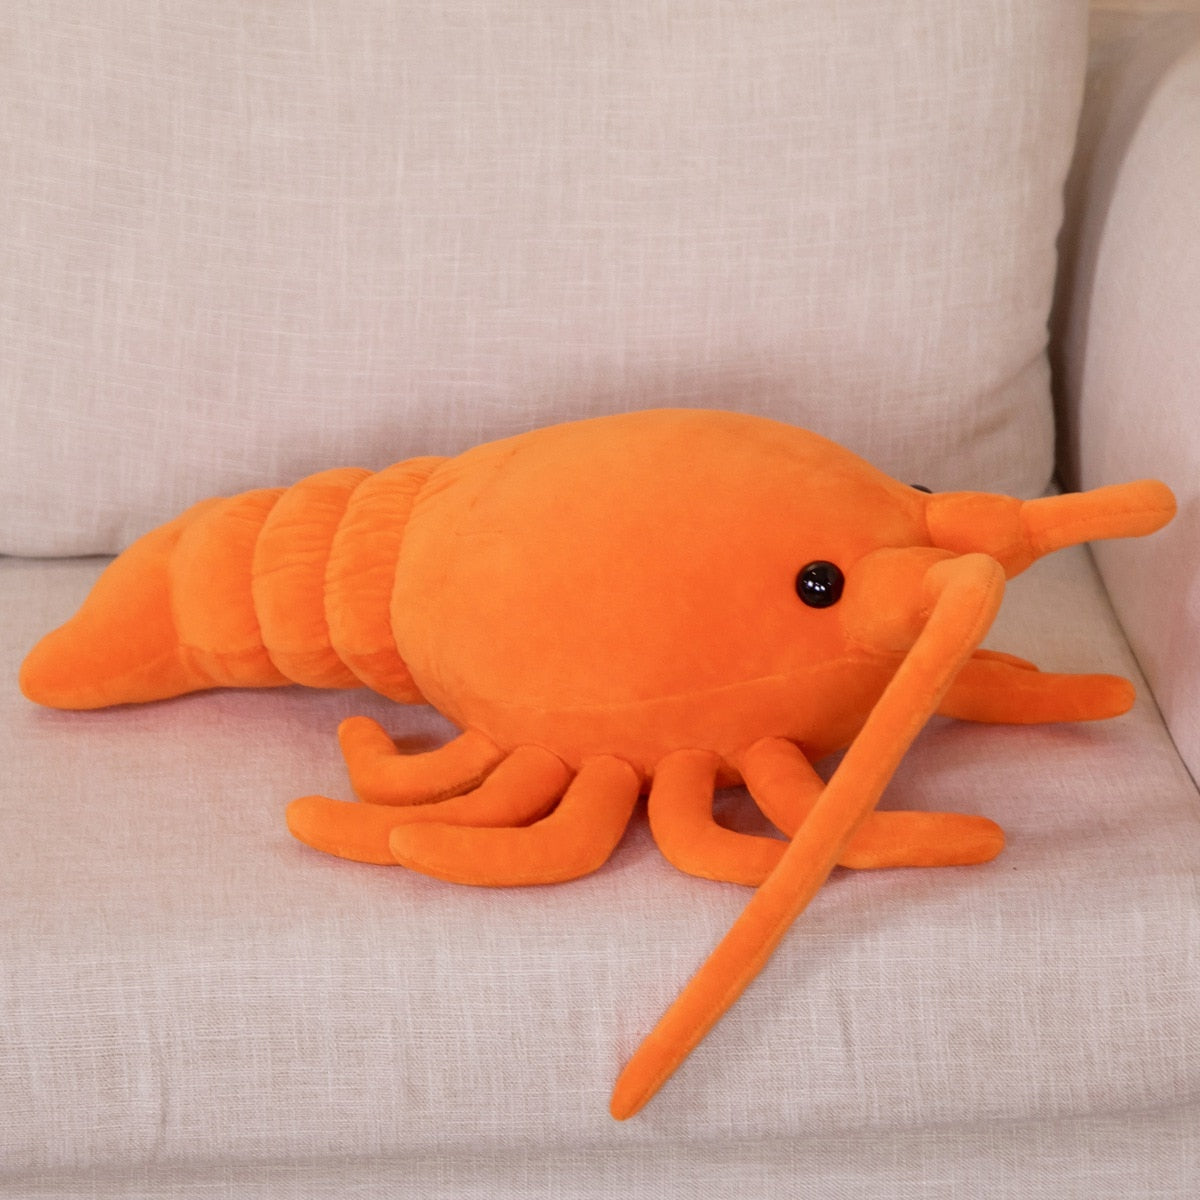 50-65cm Kawaii Red Shrimp Plush Toy -  Stuffed Animal Doll Pillow